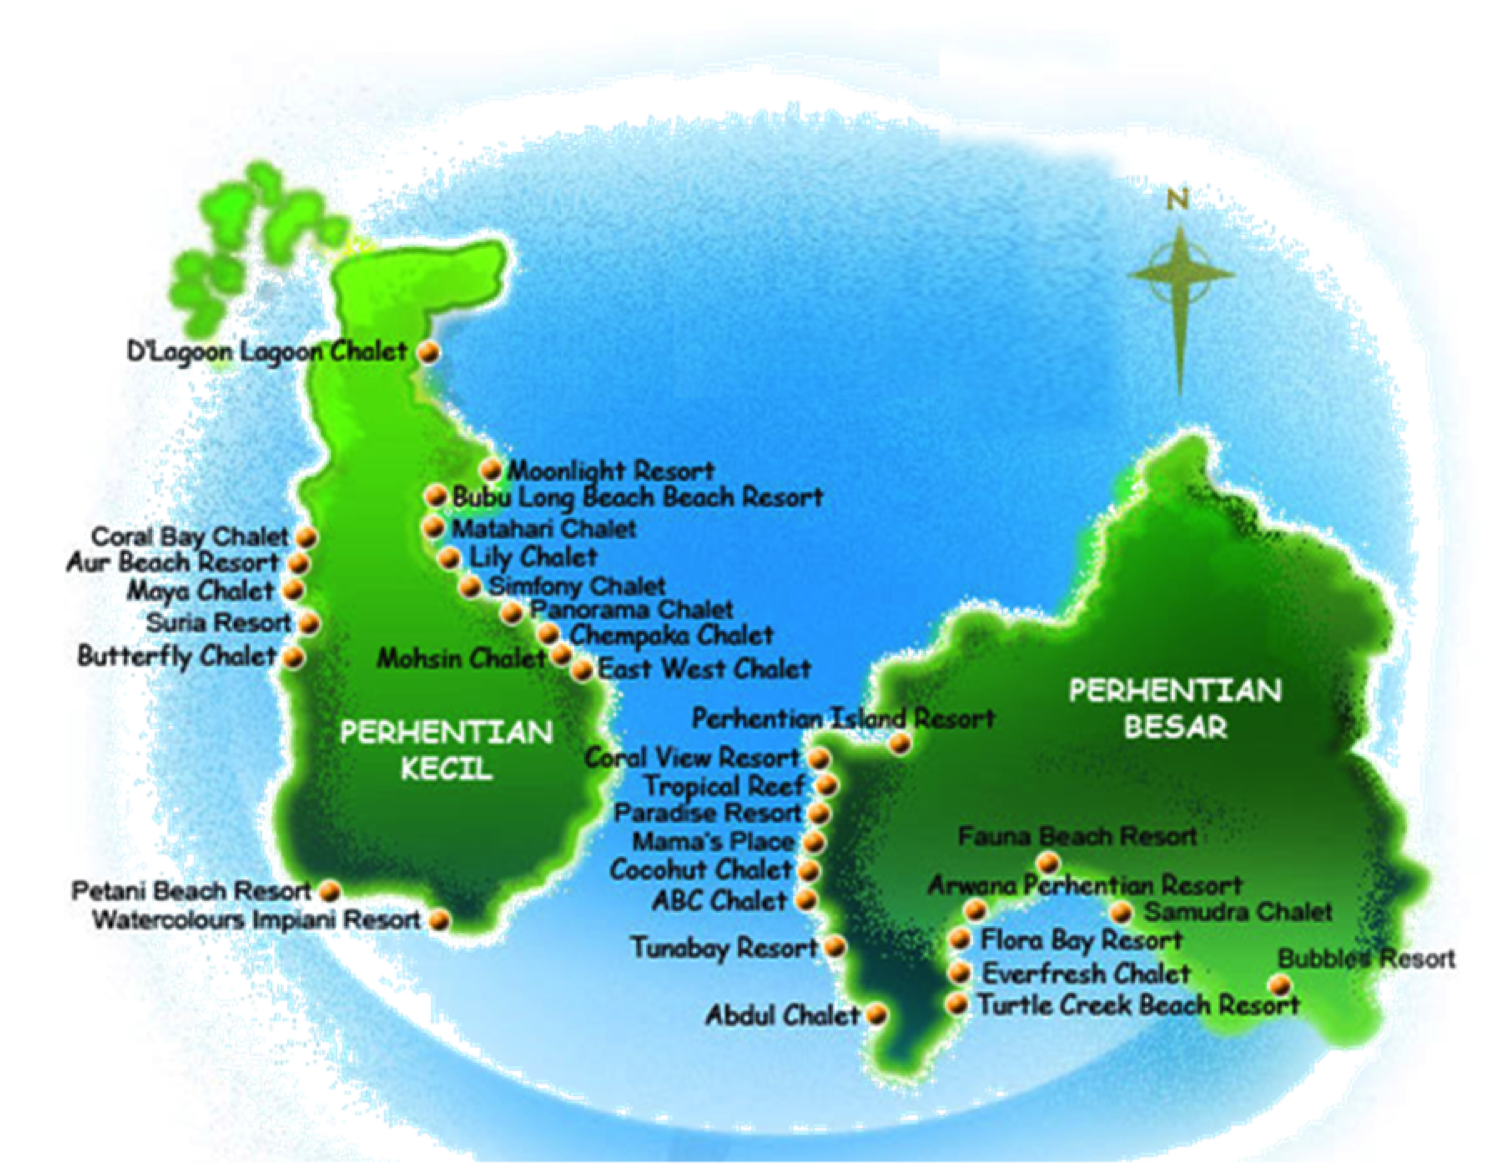 Перхентианские острова в Малайзии. Остров Перхентиан-Бесар Малайзия. Перхентианские острова в Малайзии на карте. Перхентианы на карте. And island which parts